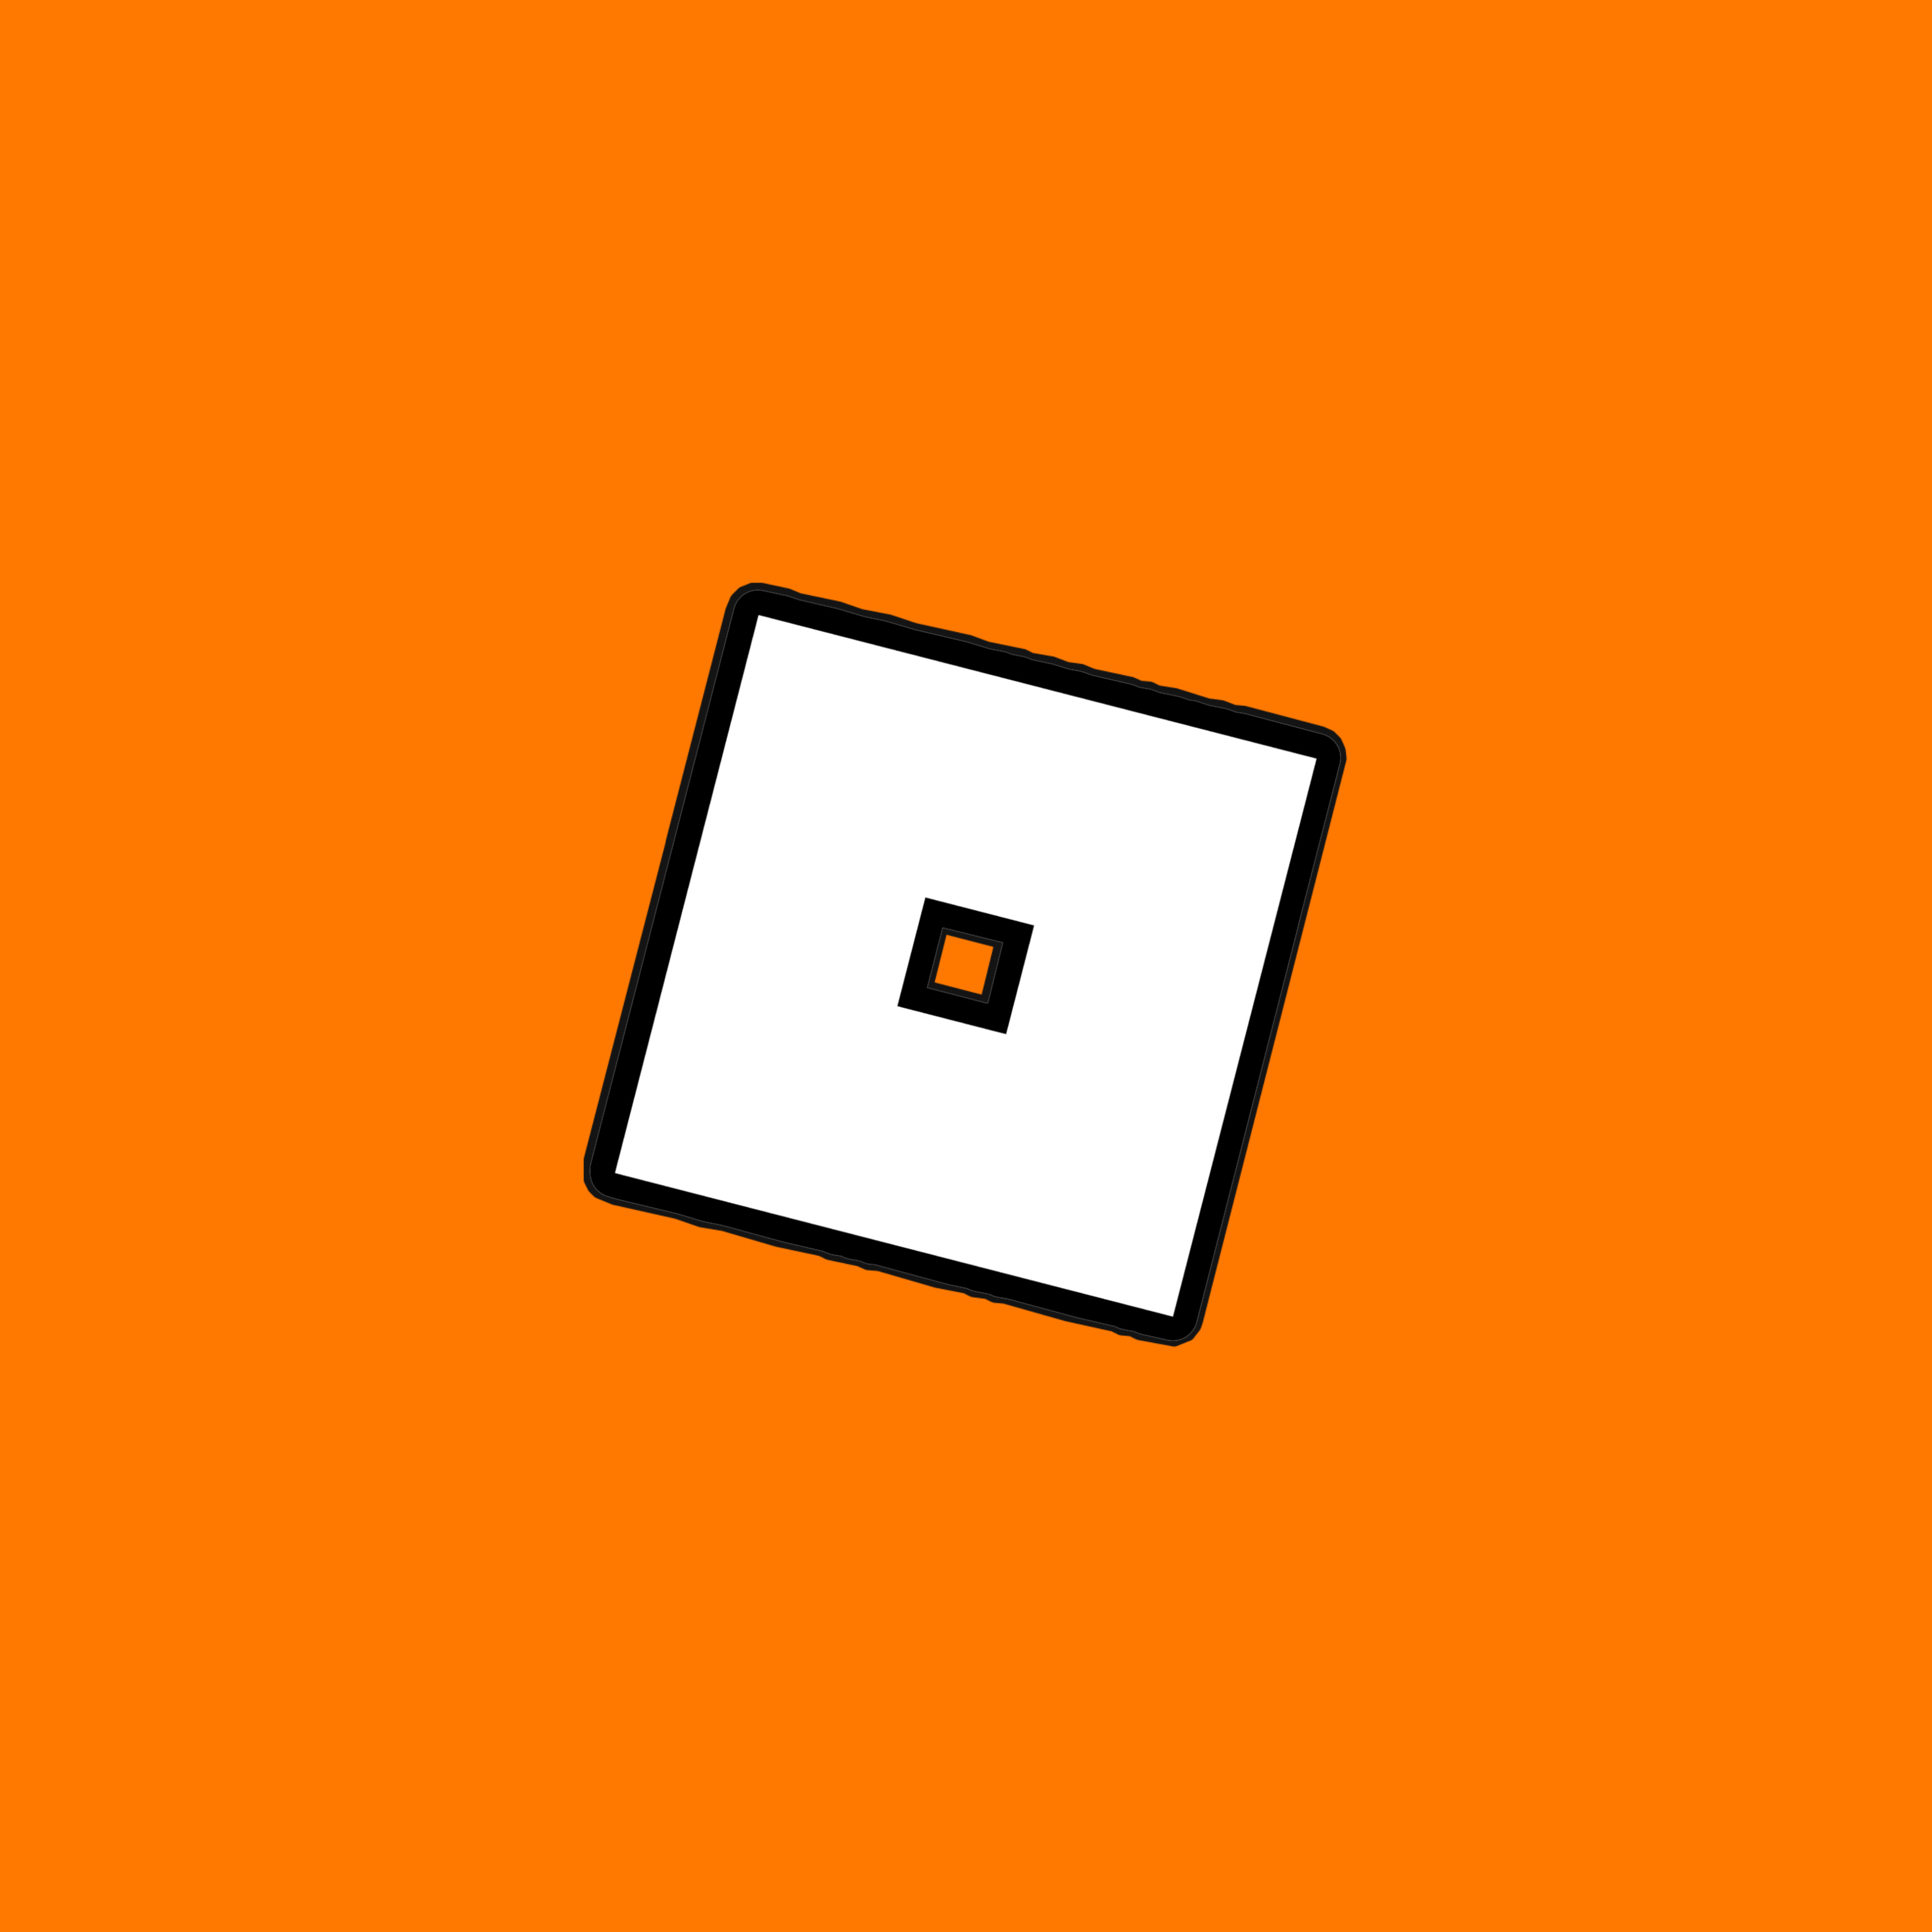 Icons Roblox Orange Roblox App Icon Image By Ii Ashe - roblox ios 14 icon